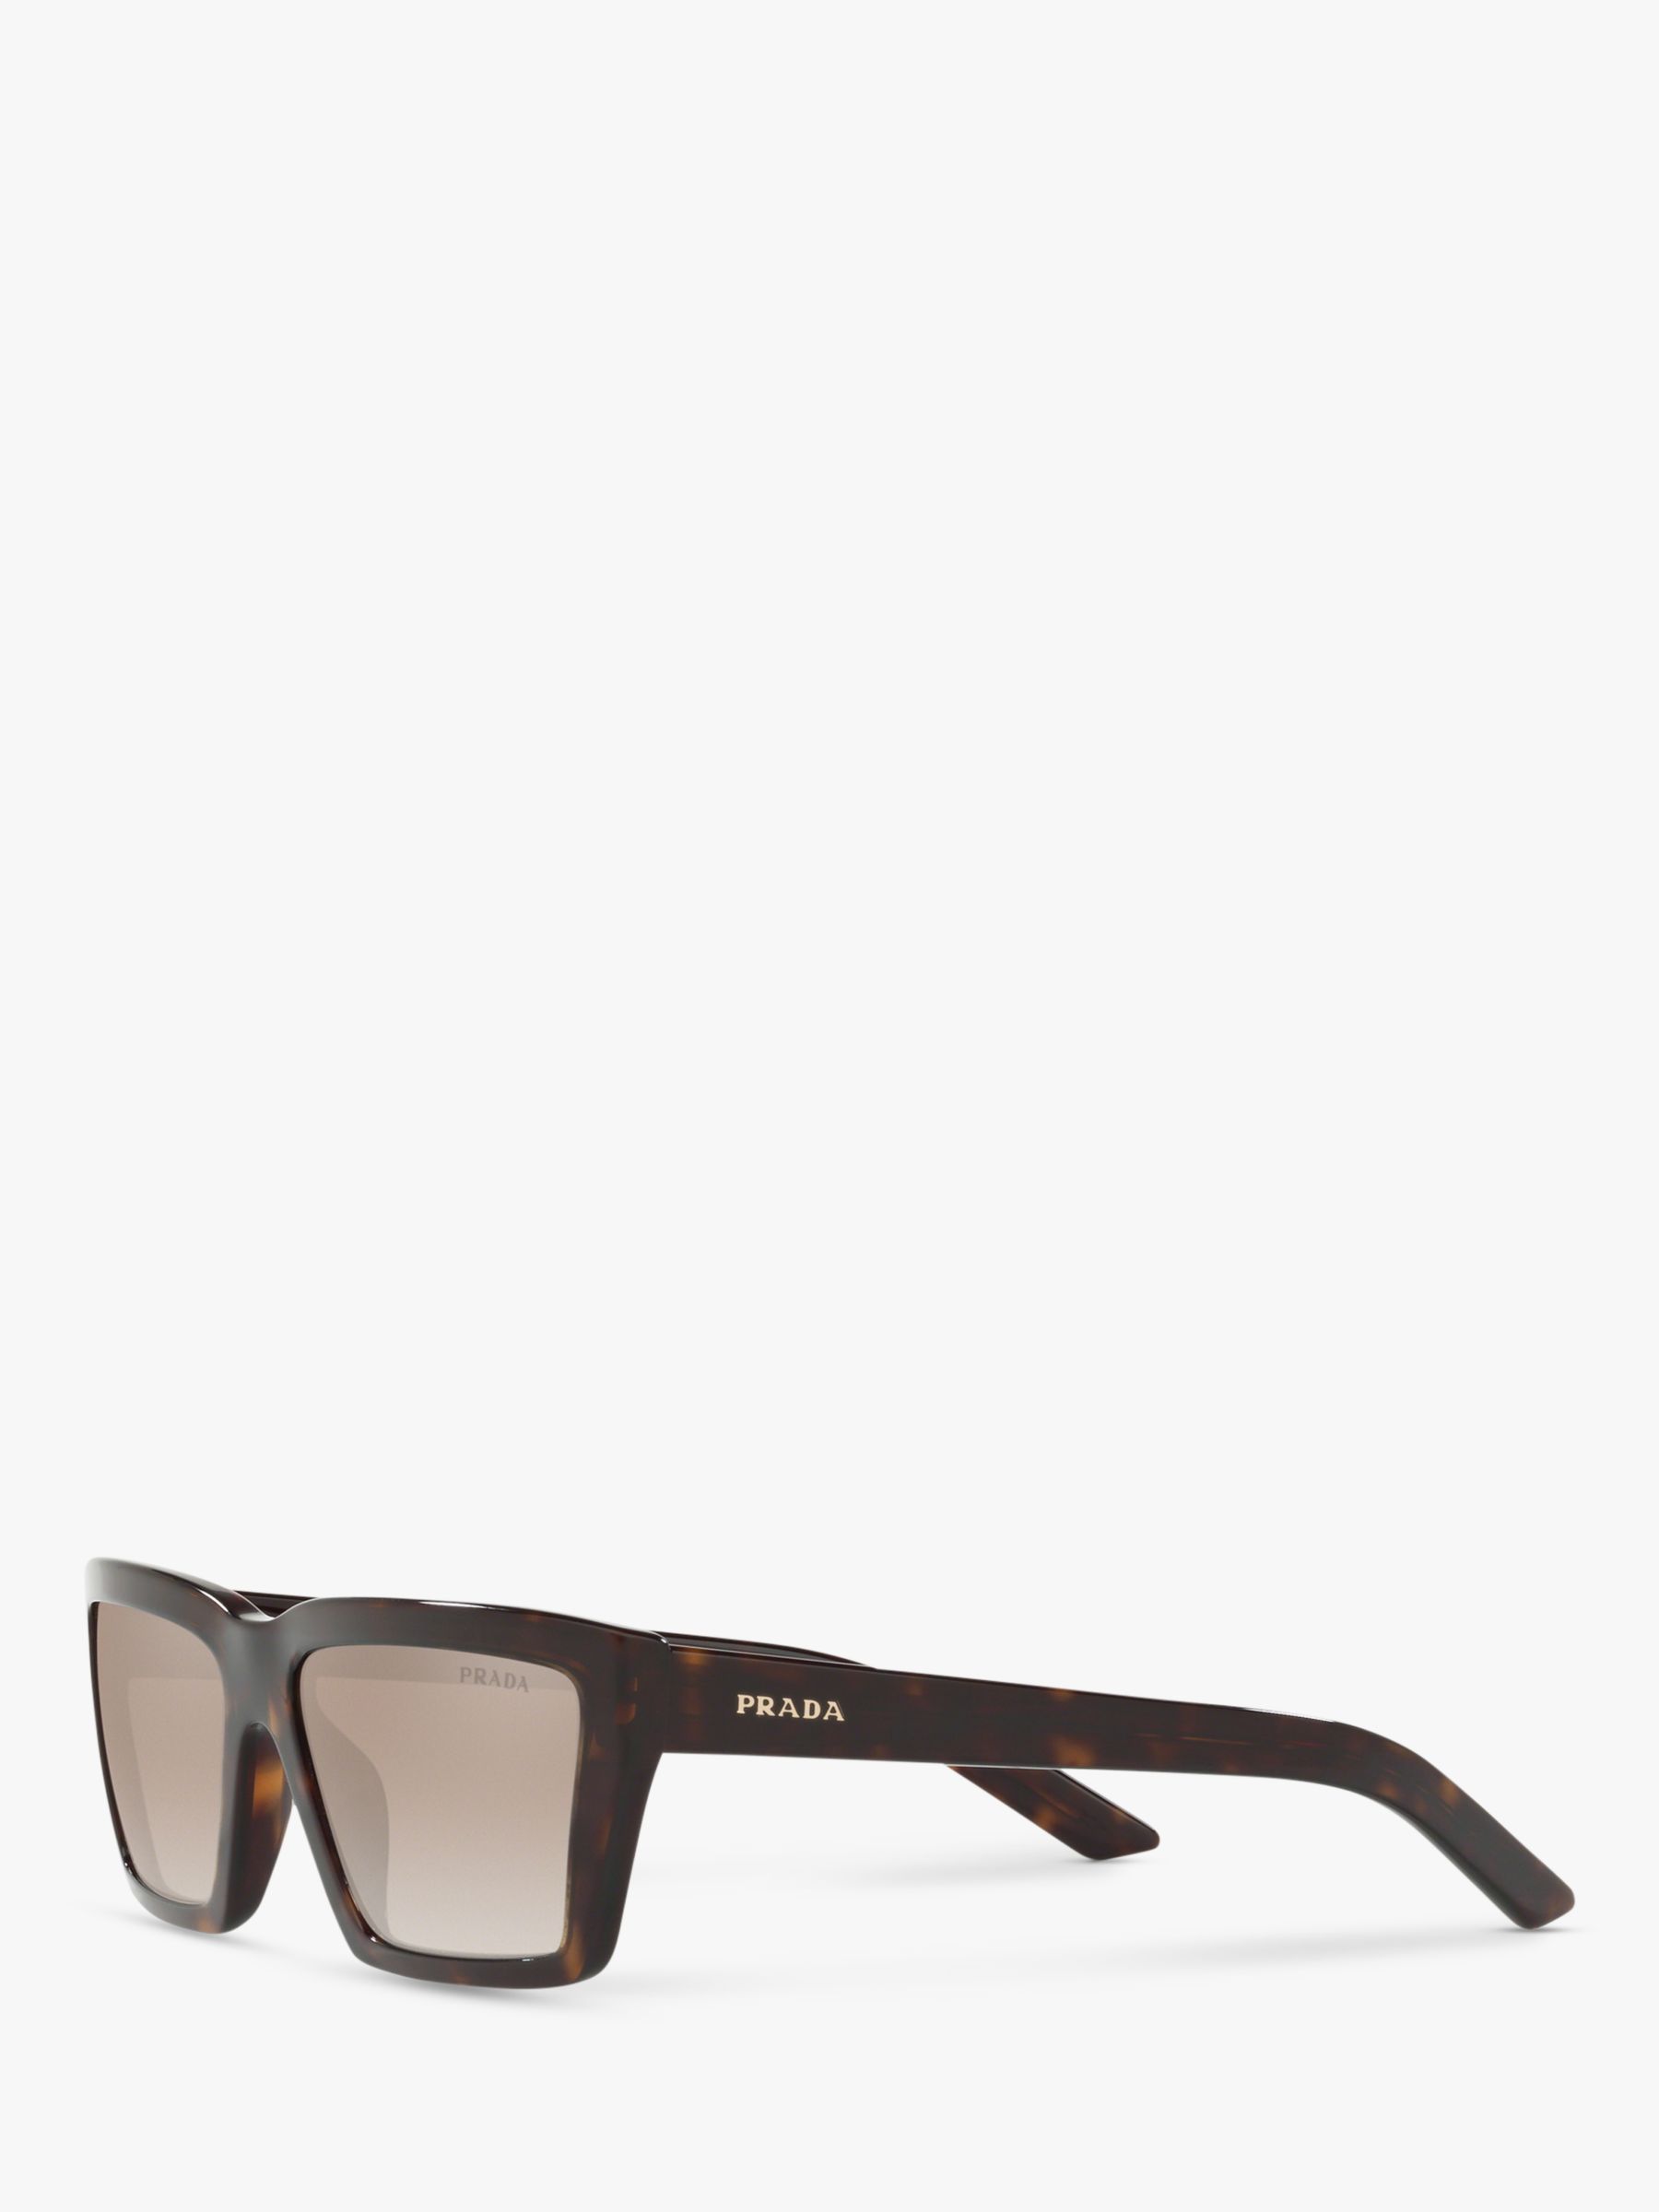 Prada PR 04VS Women's Rectangular Sunglasses, Tortoise/Grey